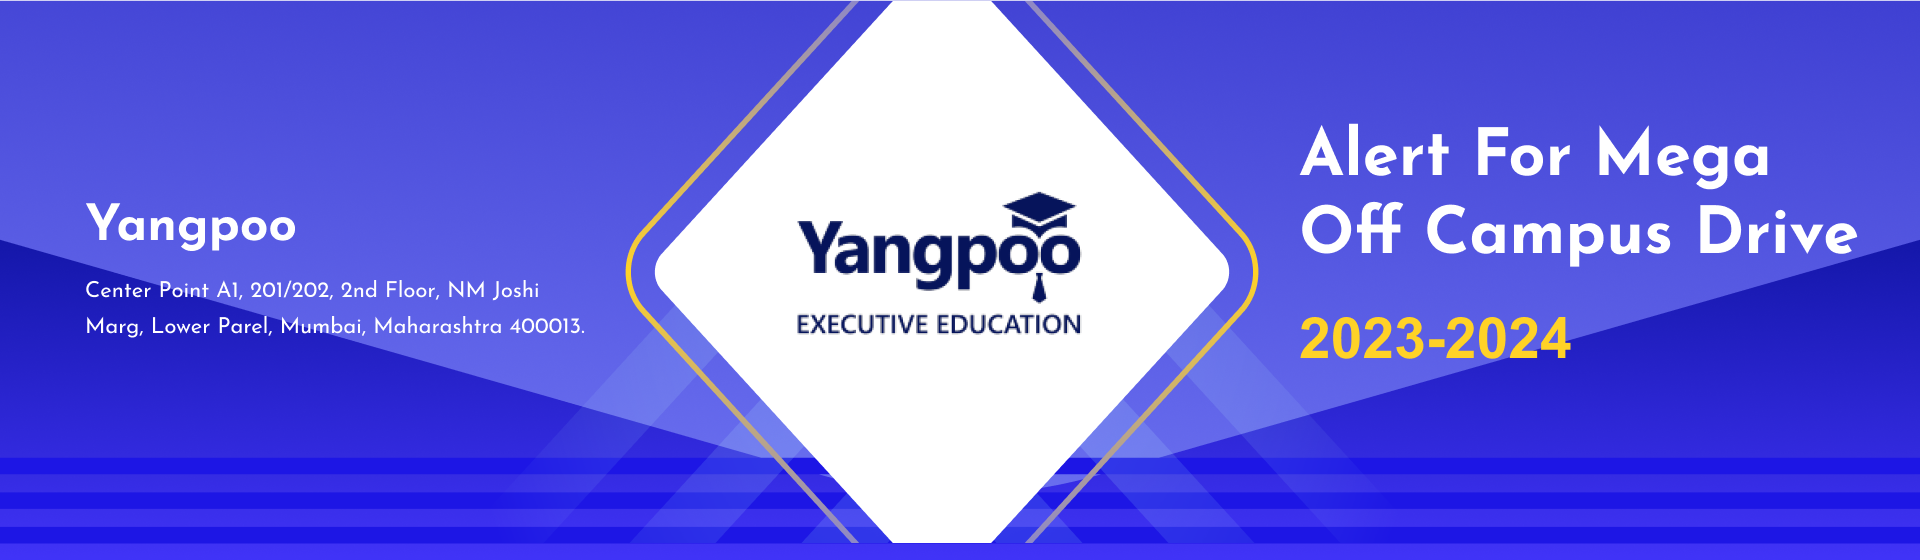 Yangpoo Executive Education